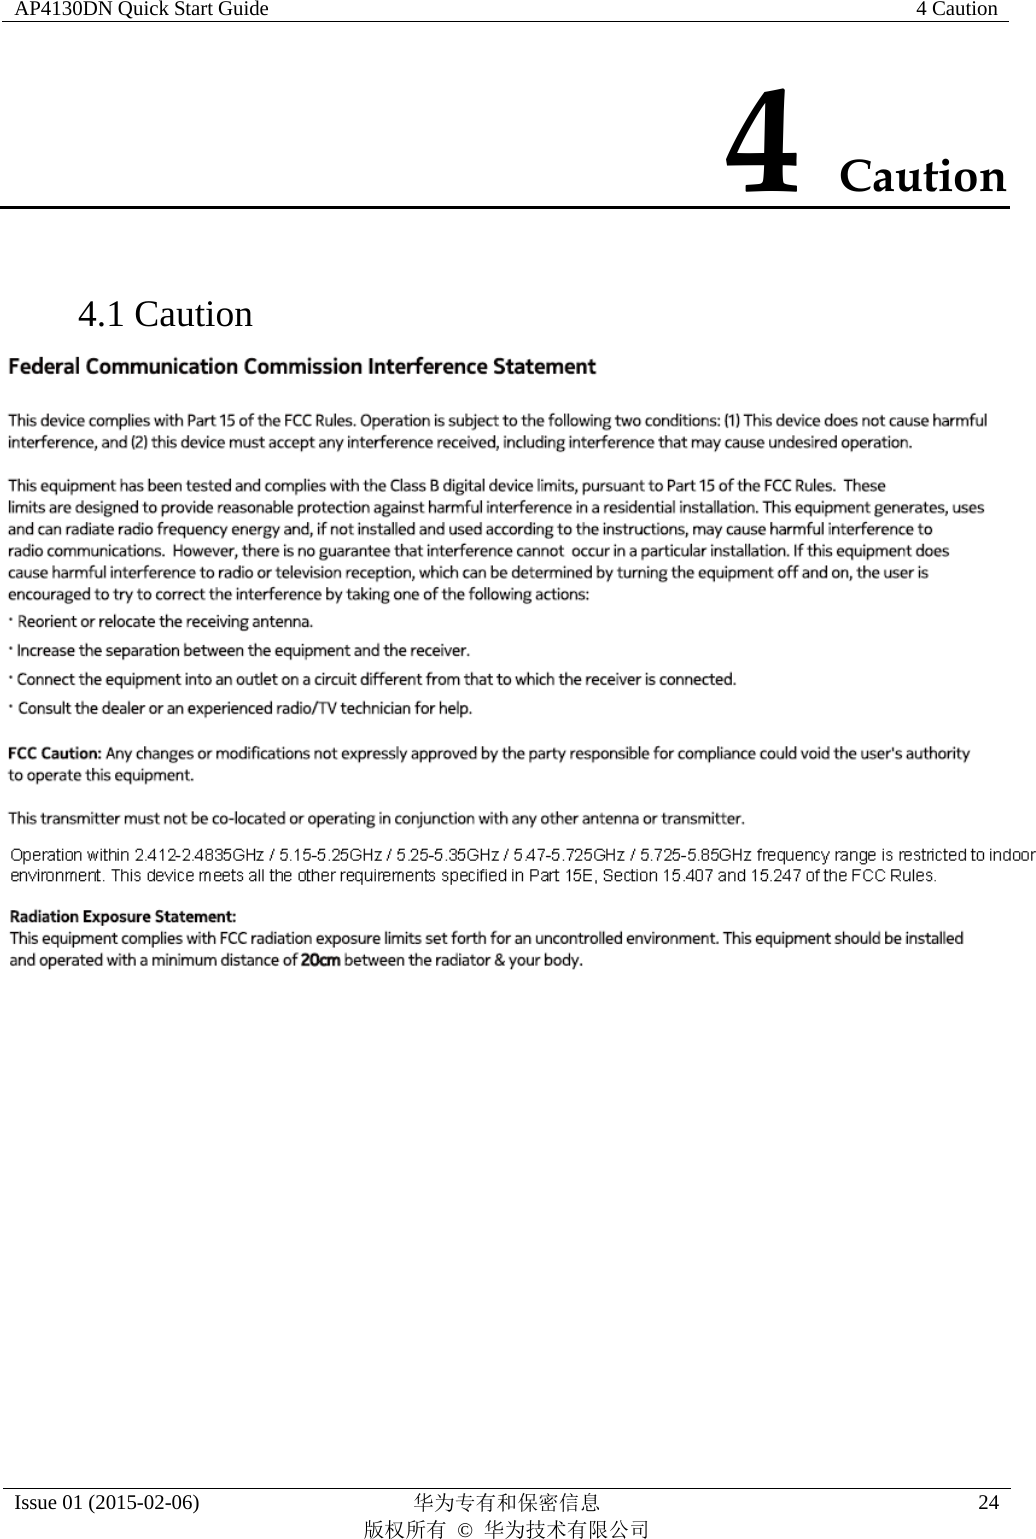 AP4130DN Quick Start Guide  4 Caution Issue 01 (2015-02-06)  华为专有和保密信息        版权所有 © 华为技术有限公司 24 4 Caution 4.1 Caution   